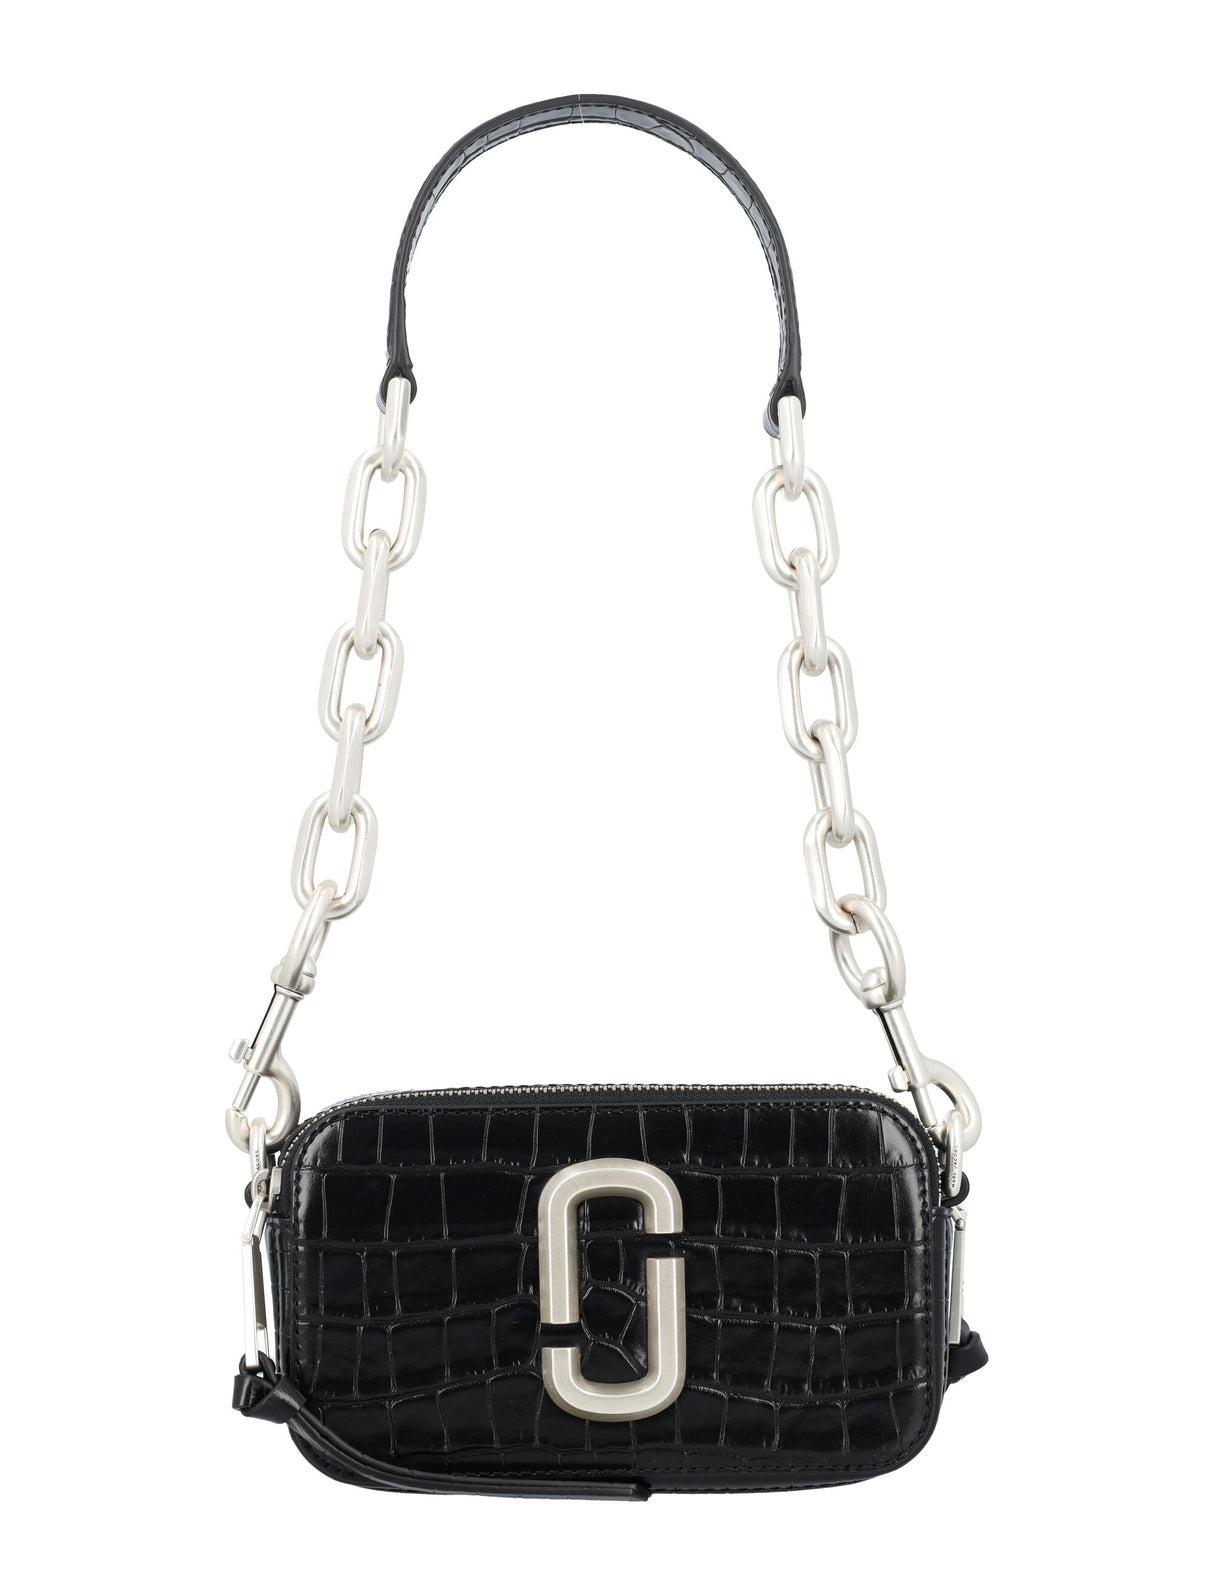 MARC JACOBS The Croc-Embossed Snapshot Leather Handbag for Women